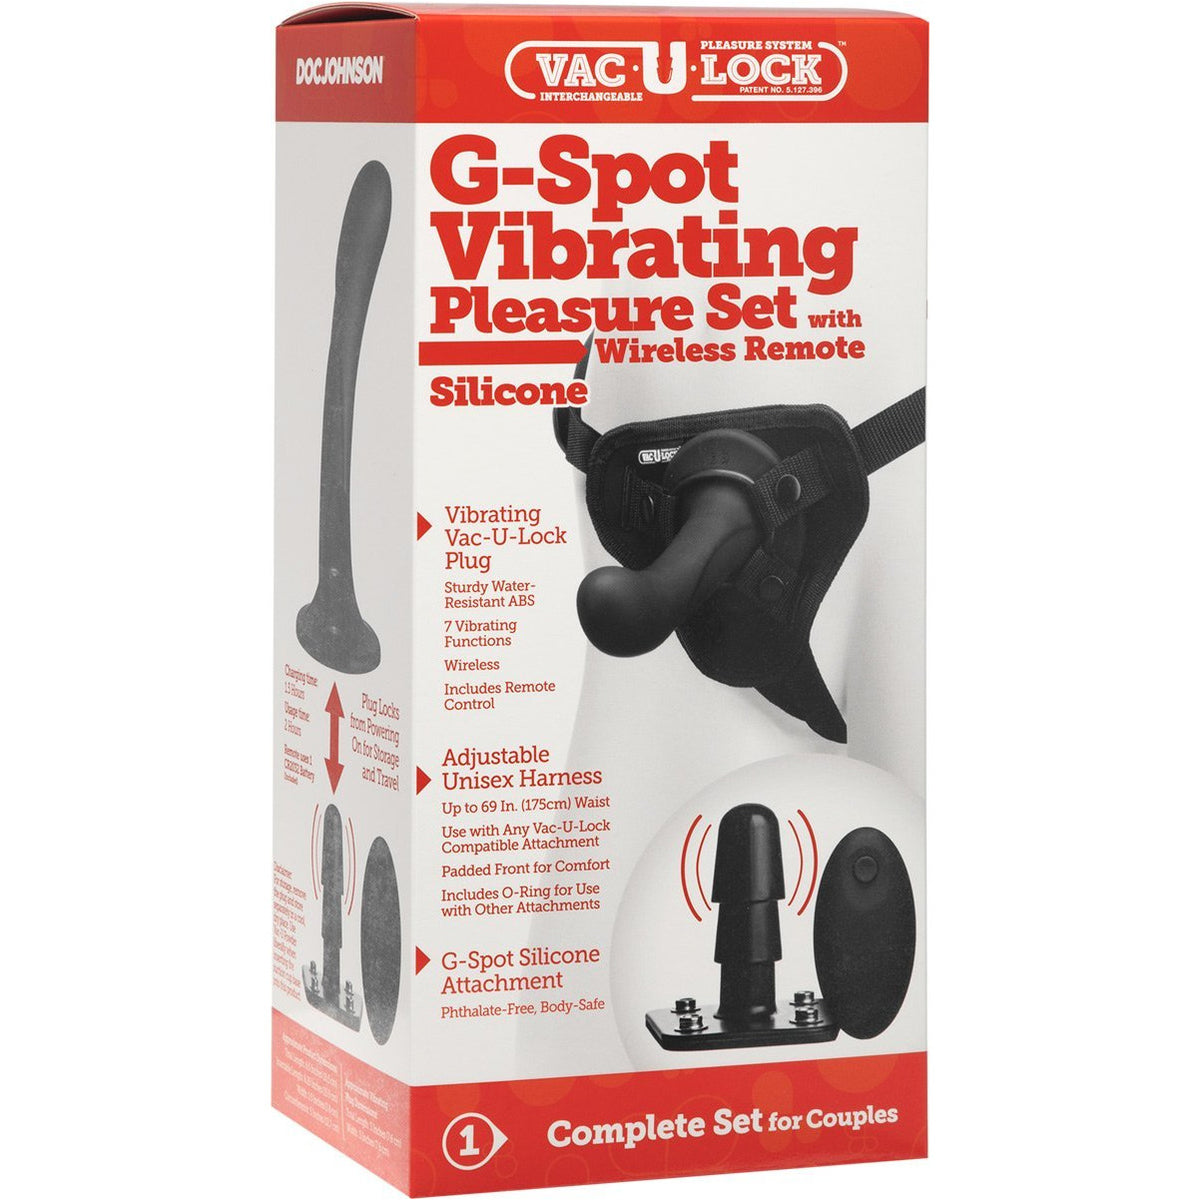 Doc Johnson Vac-U-Lock – G-Spot Vibrating Pleasure Set with Remote